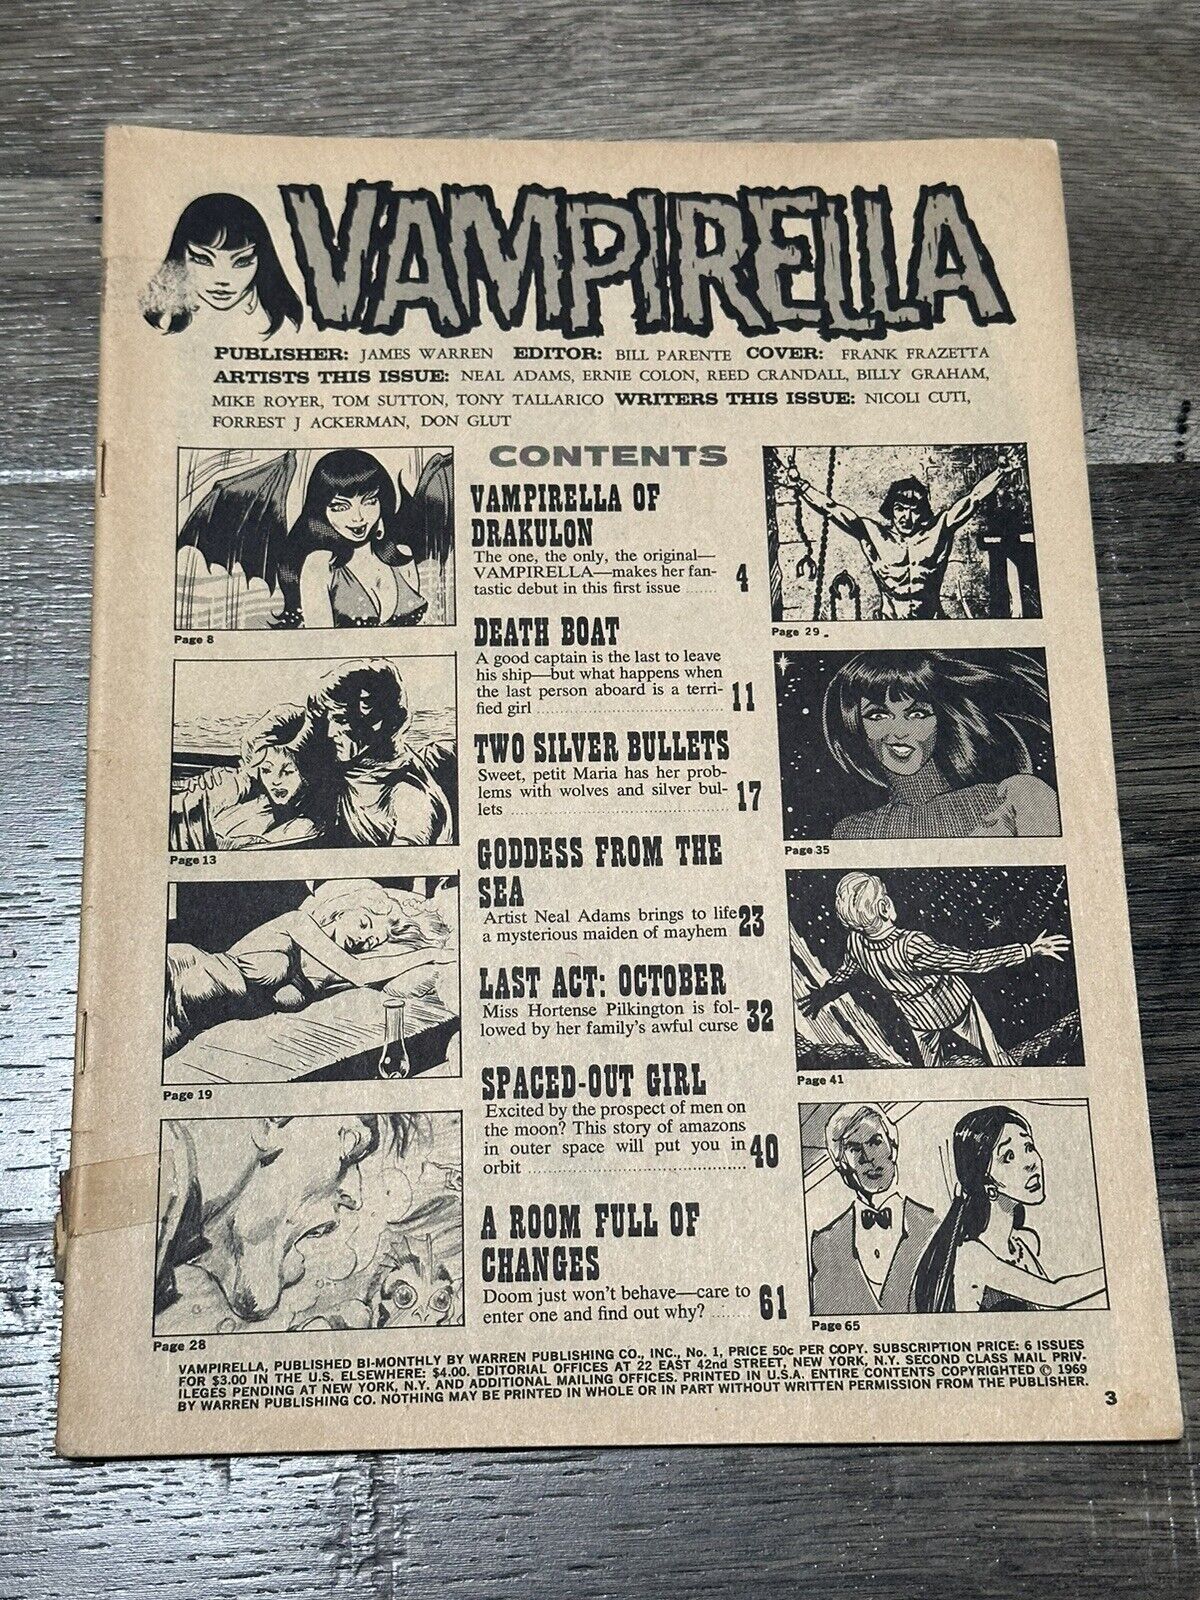 VAMPIRELLA 1  1969  COVERLESS COPY - ORIGIN & 1ST APP OF VAMPIRELLA (Warren)